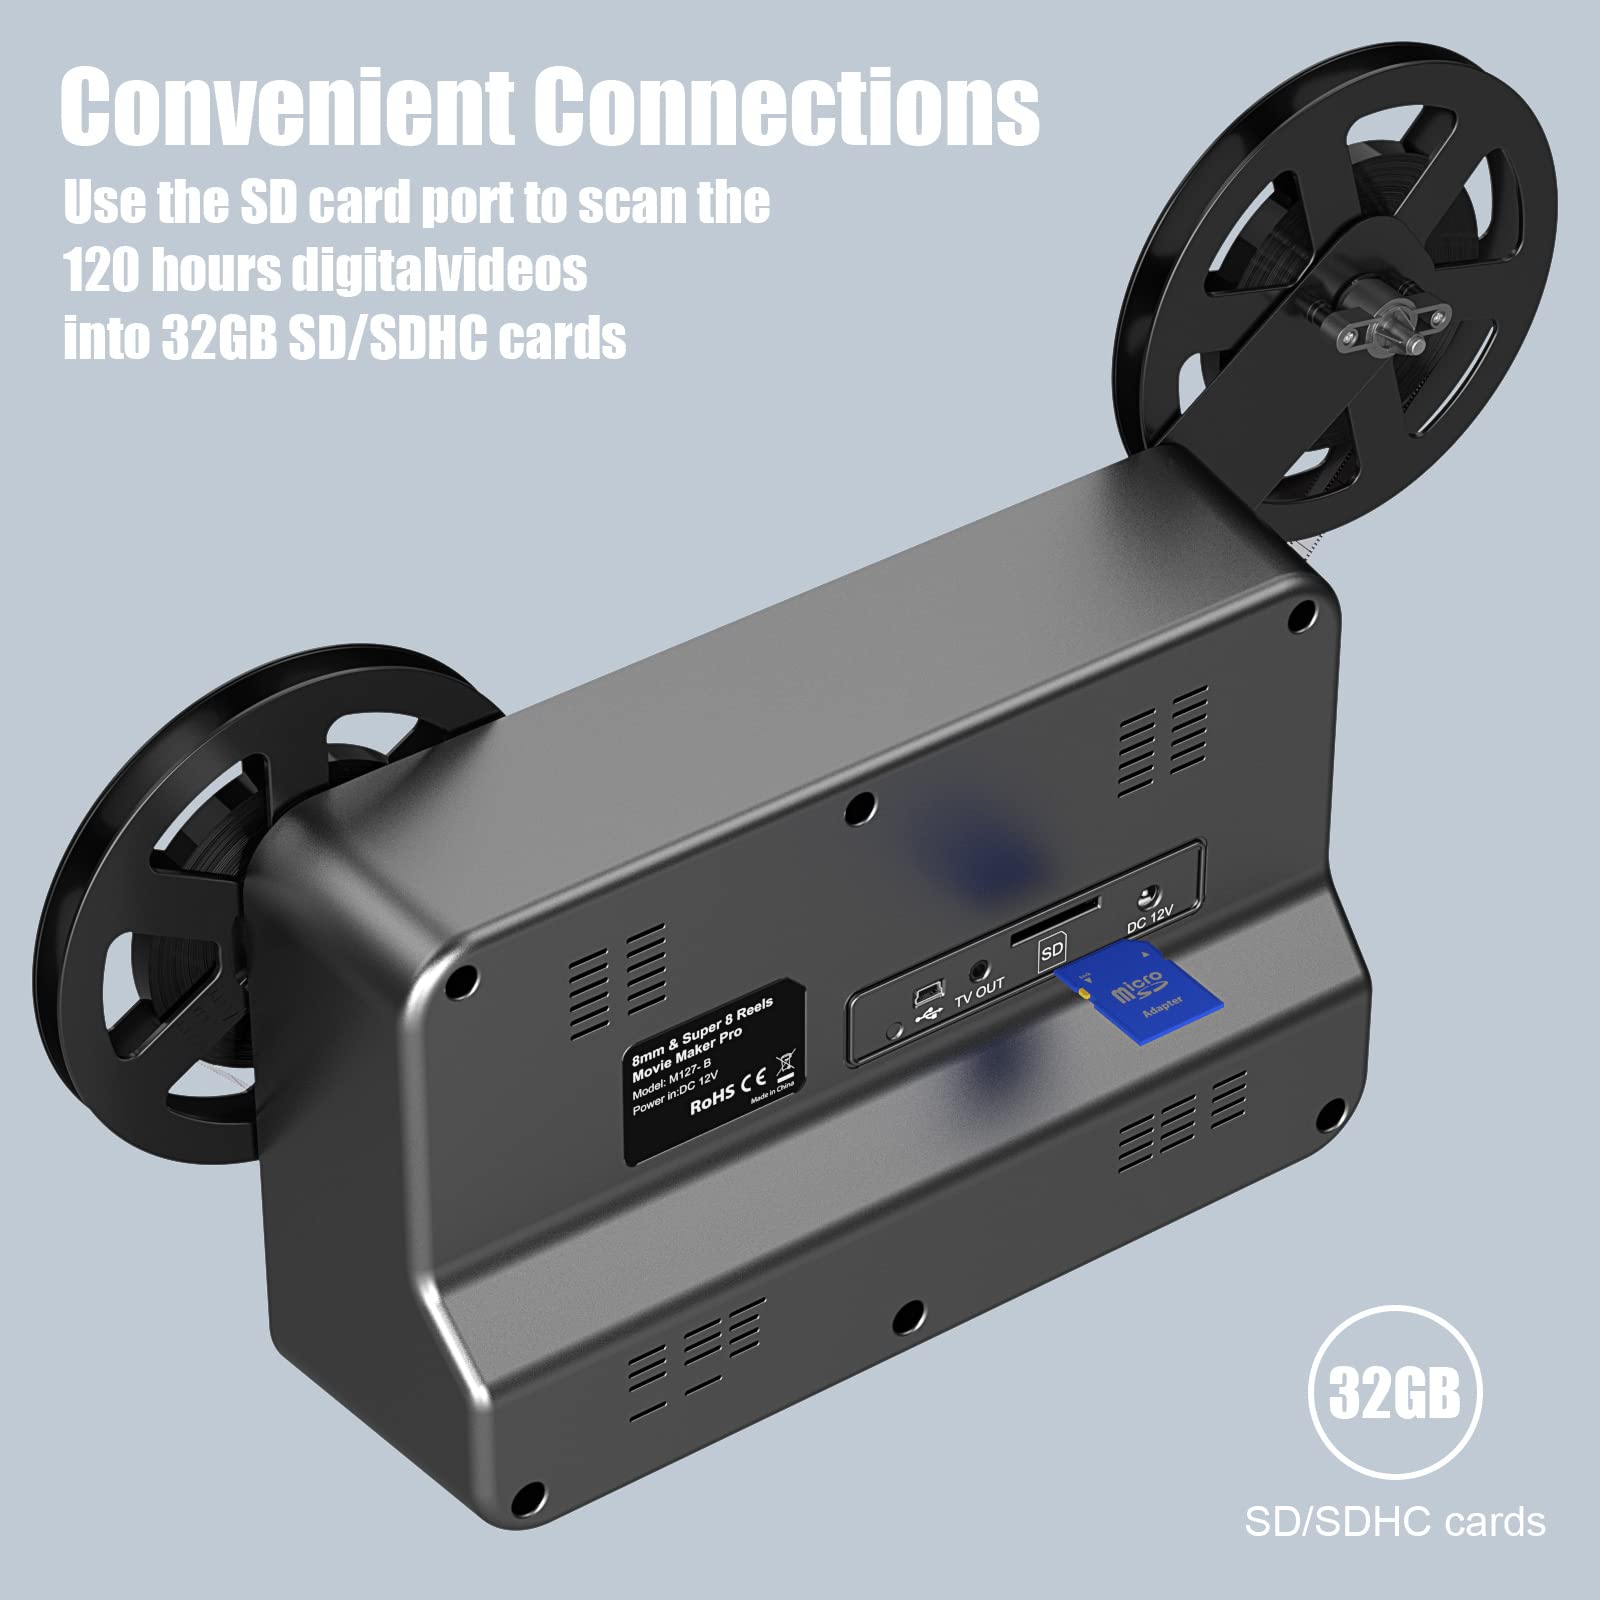 8mm & Super 8 Reels to Digital Film Scanner (Convert 3” 4” 5” 7” 9” Reels) into 1080P MP4